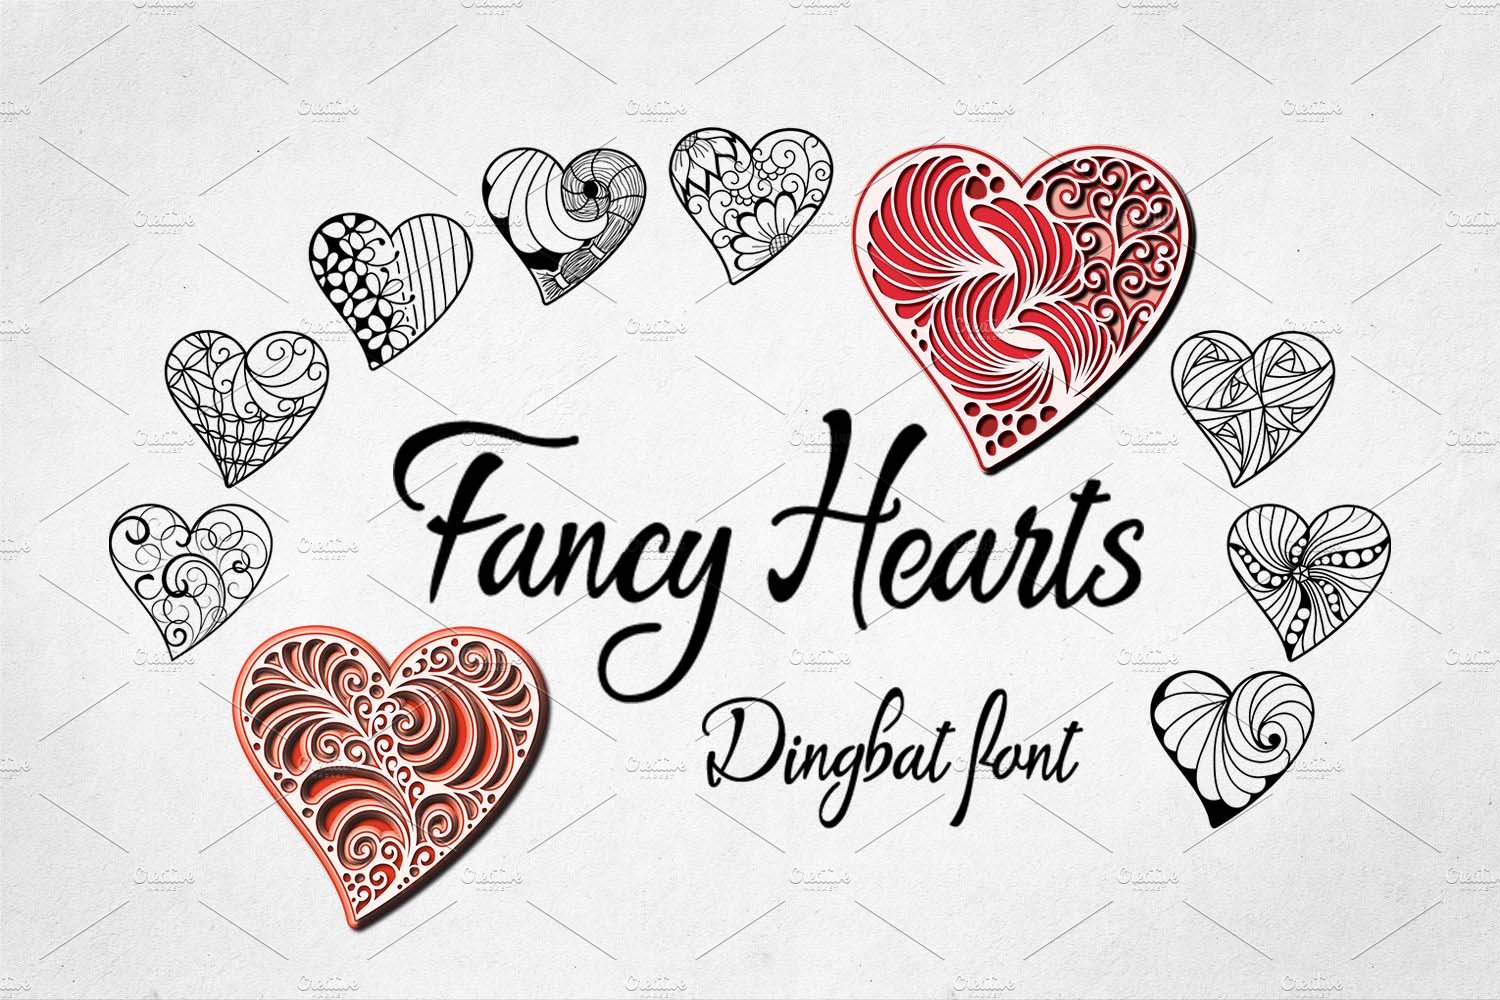 Fancy Hearts Dingbat Font cover image.